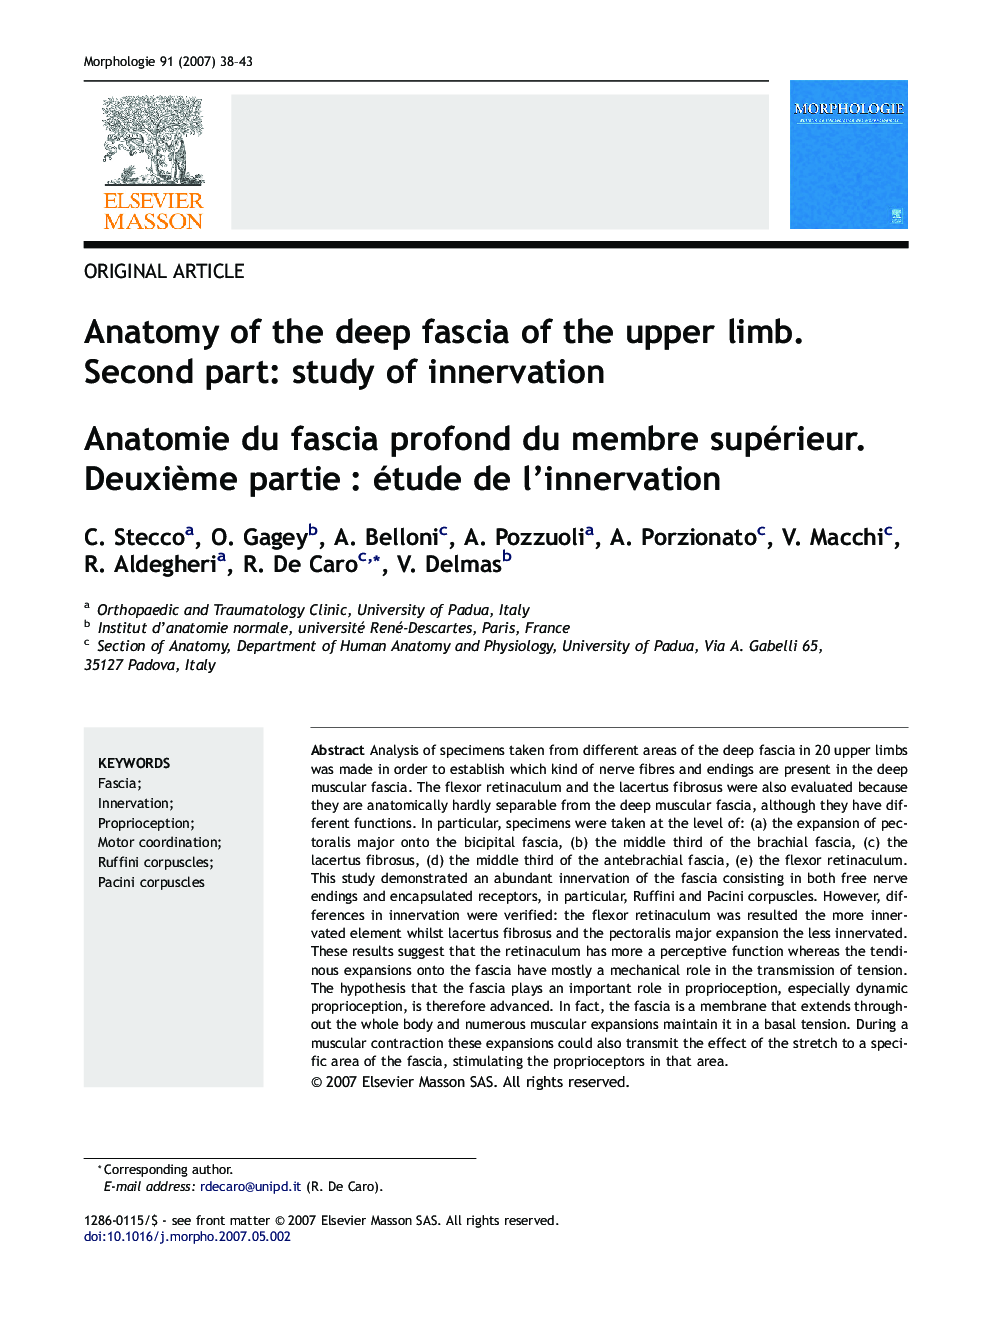 Anatomy ofÂ theÂ deep fascia ofÂ theÂ upper limb. SecondÂ part: study ofÂ innervation